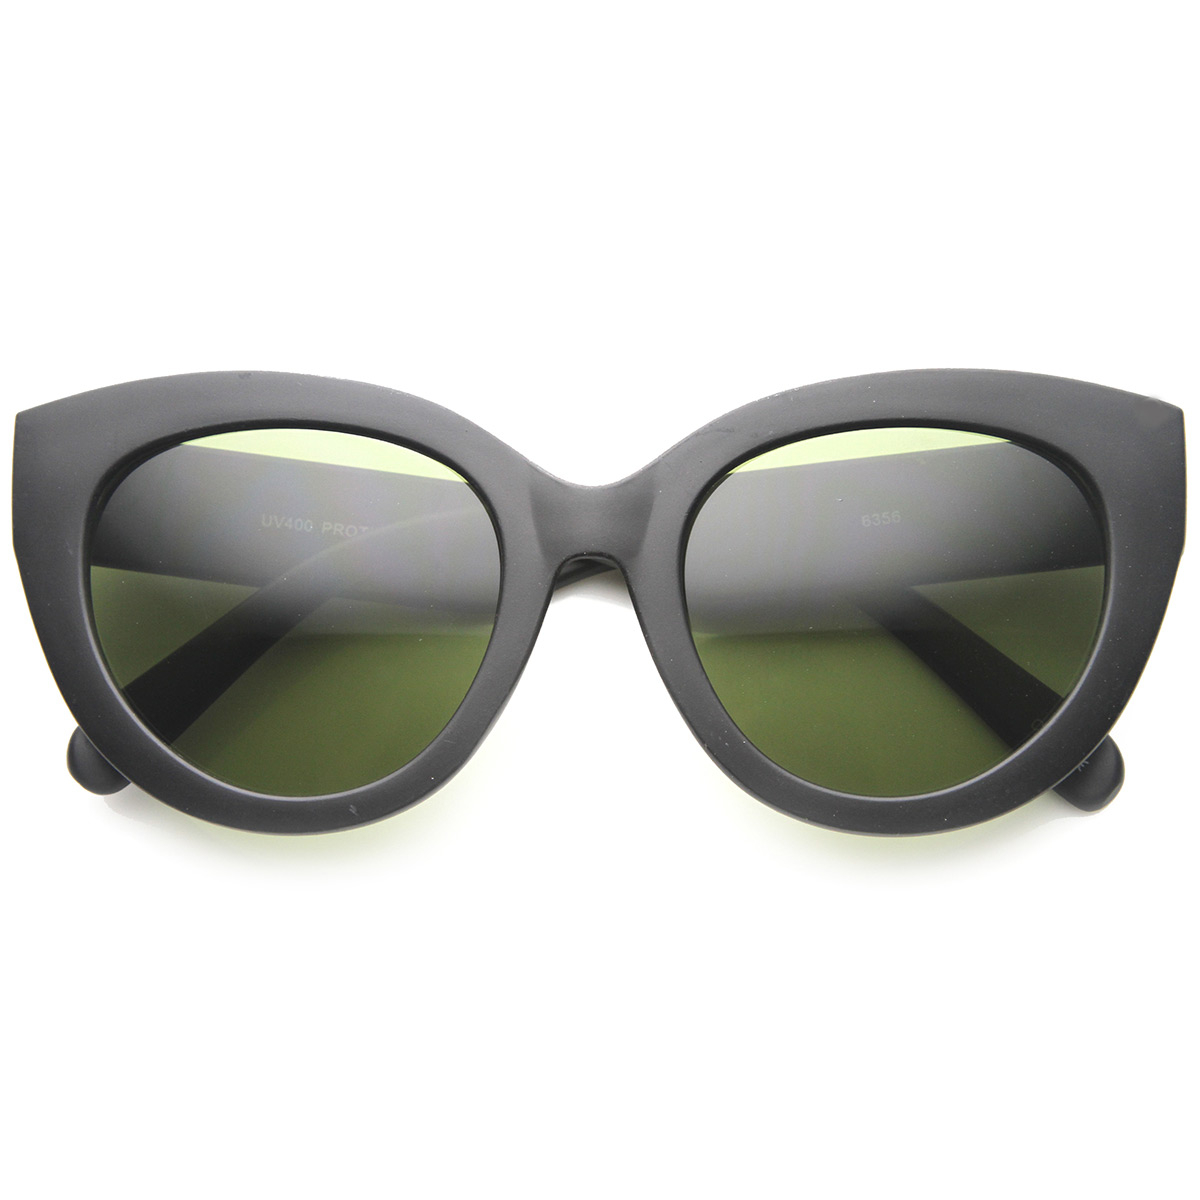 Ladies Oversized Elegant Bold Rim Round Cateye Sunglasses 9742 - Shiny-Tortoise Amber